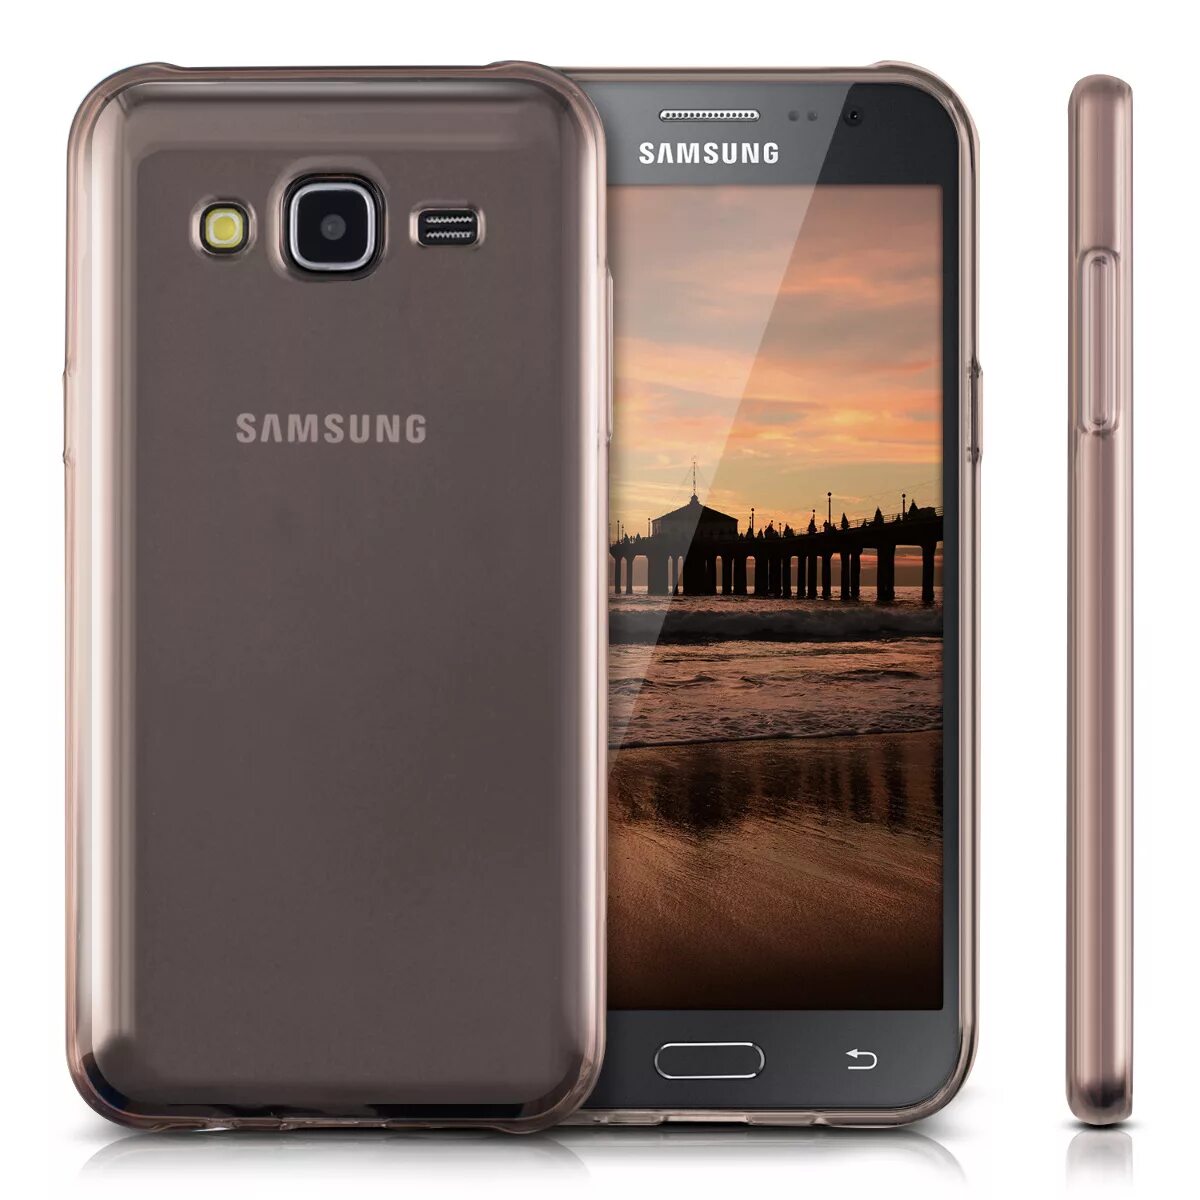 Джи 5 отзывы. Samsung j5 2015. Samsung Galaxy j5. Samsung Galaxy j5 2014. Самсунг галакси Джи 5.